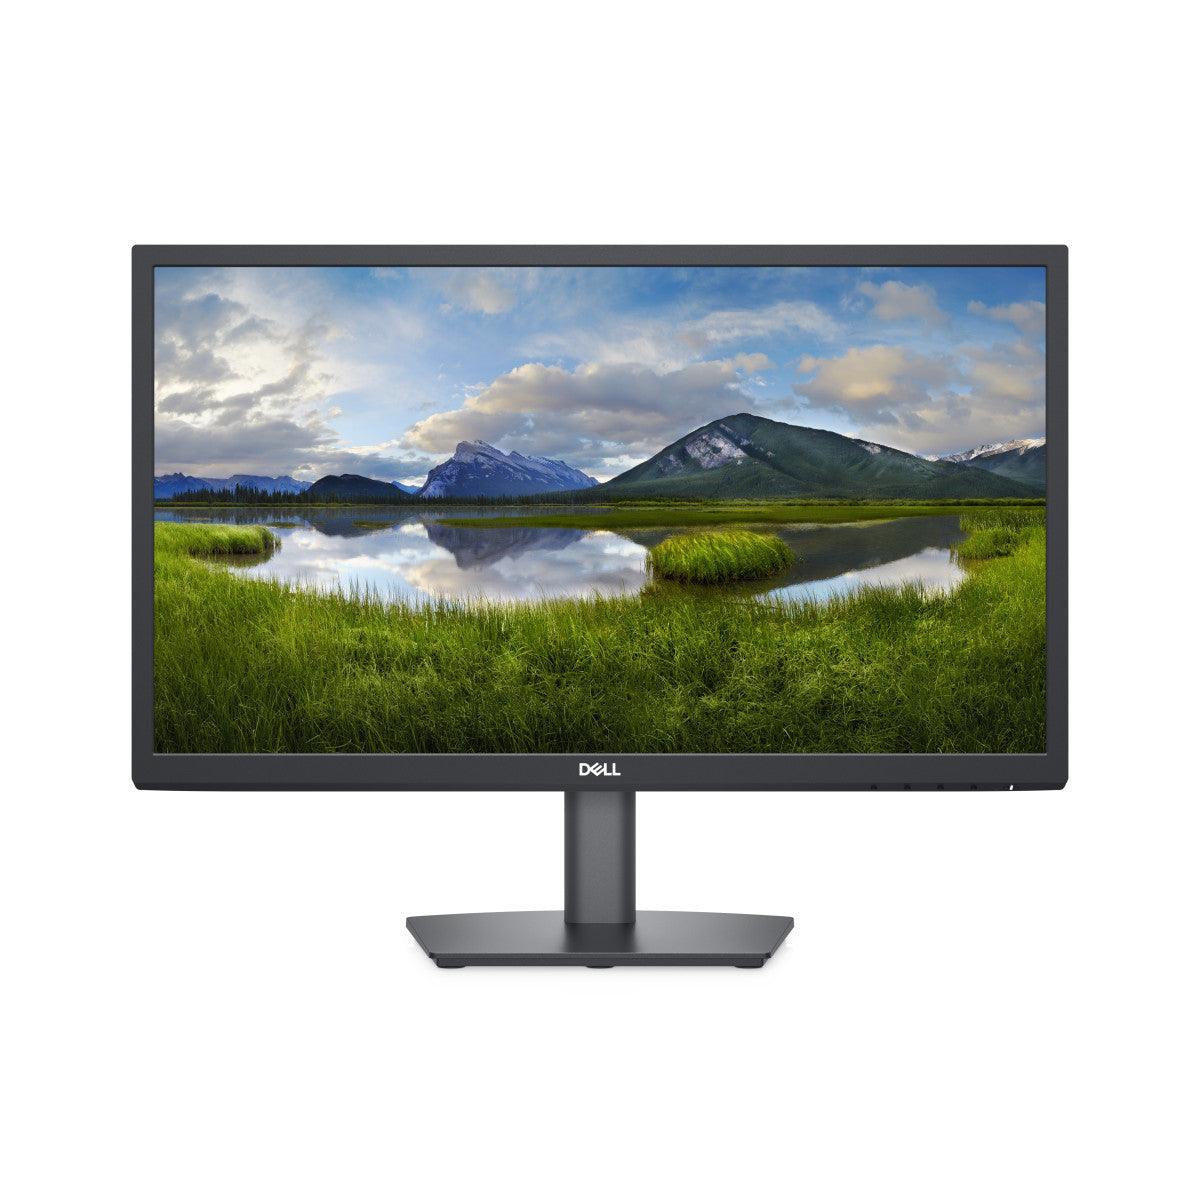 Dell 22 Monitor - E2222H - Want a New Gadget